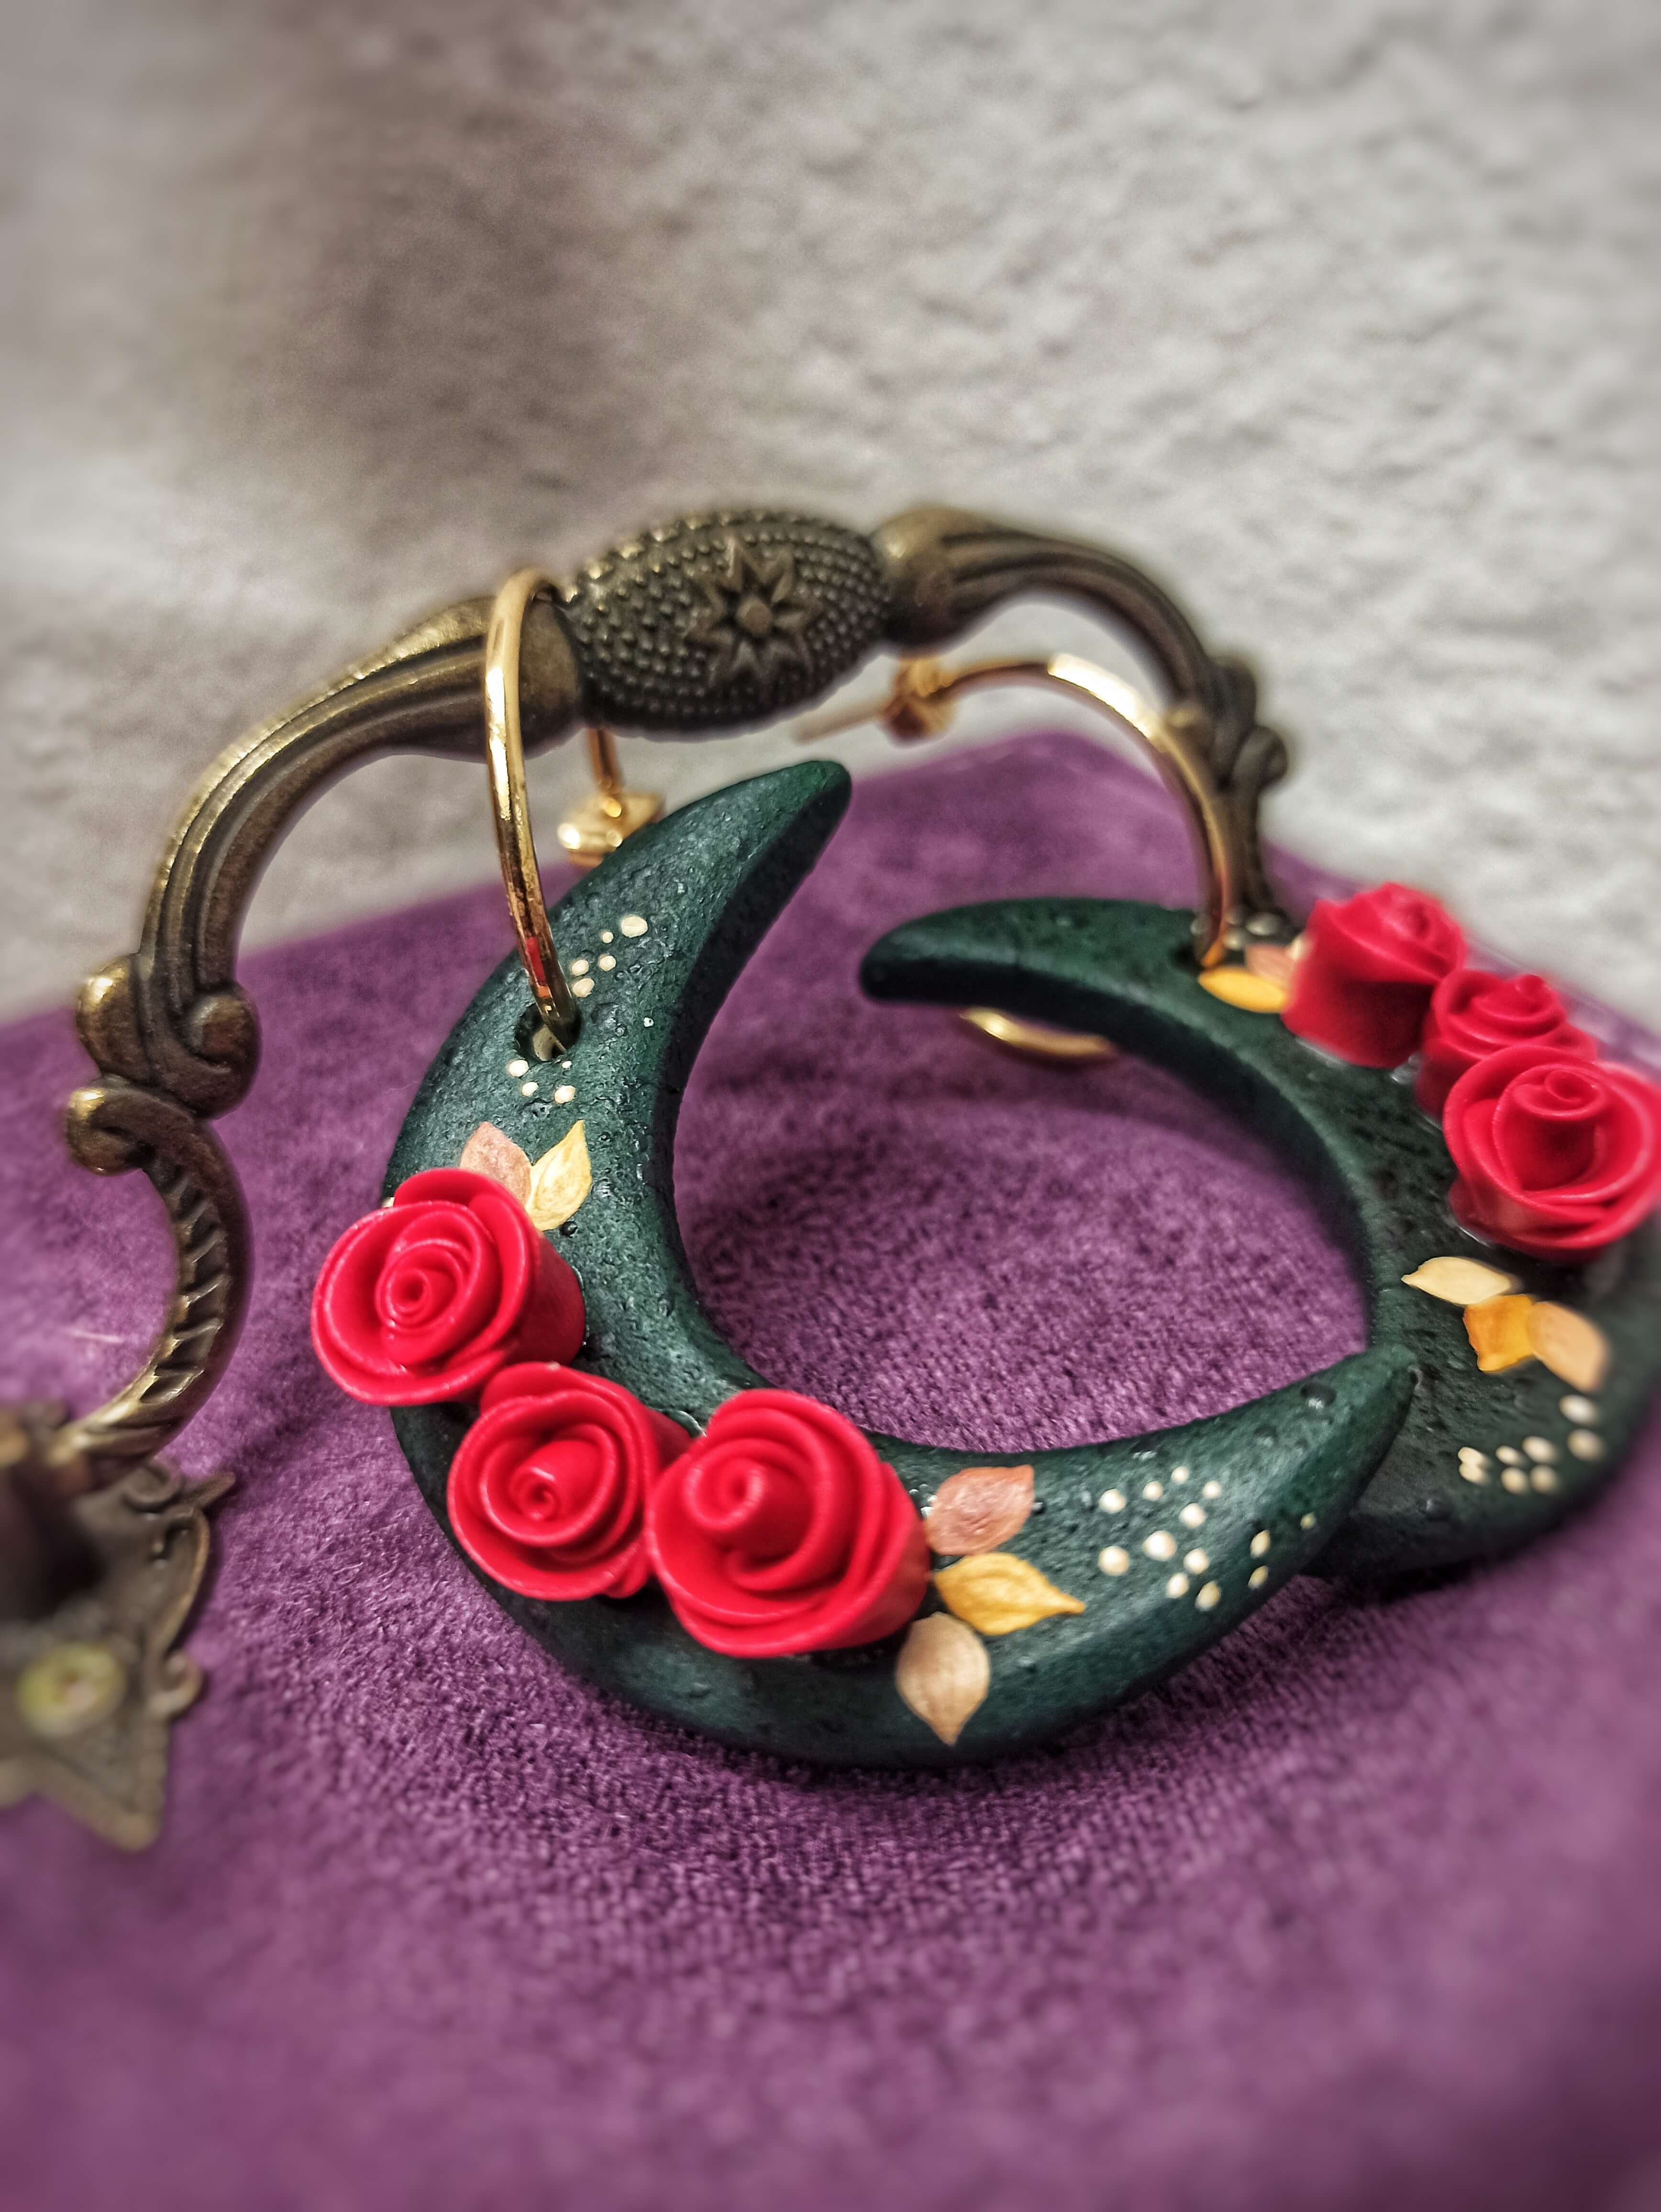 Celestial, red roses handmade clay earrings